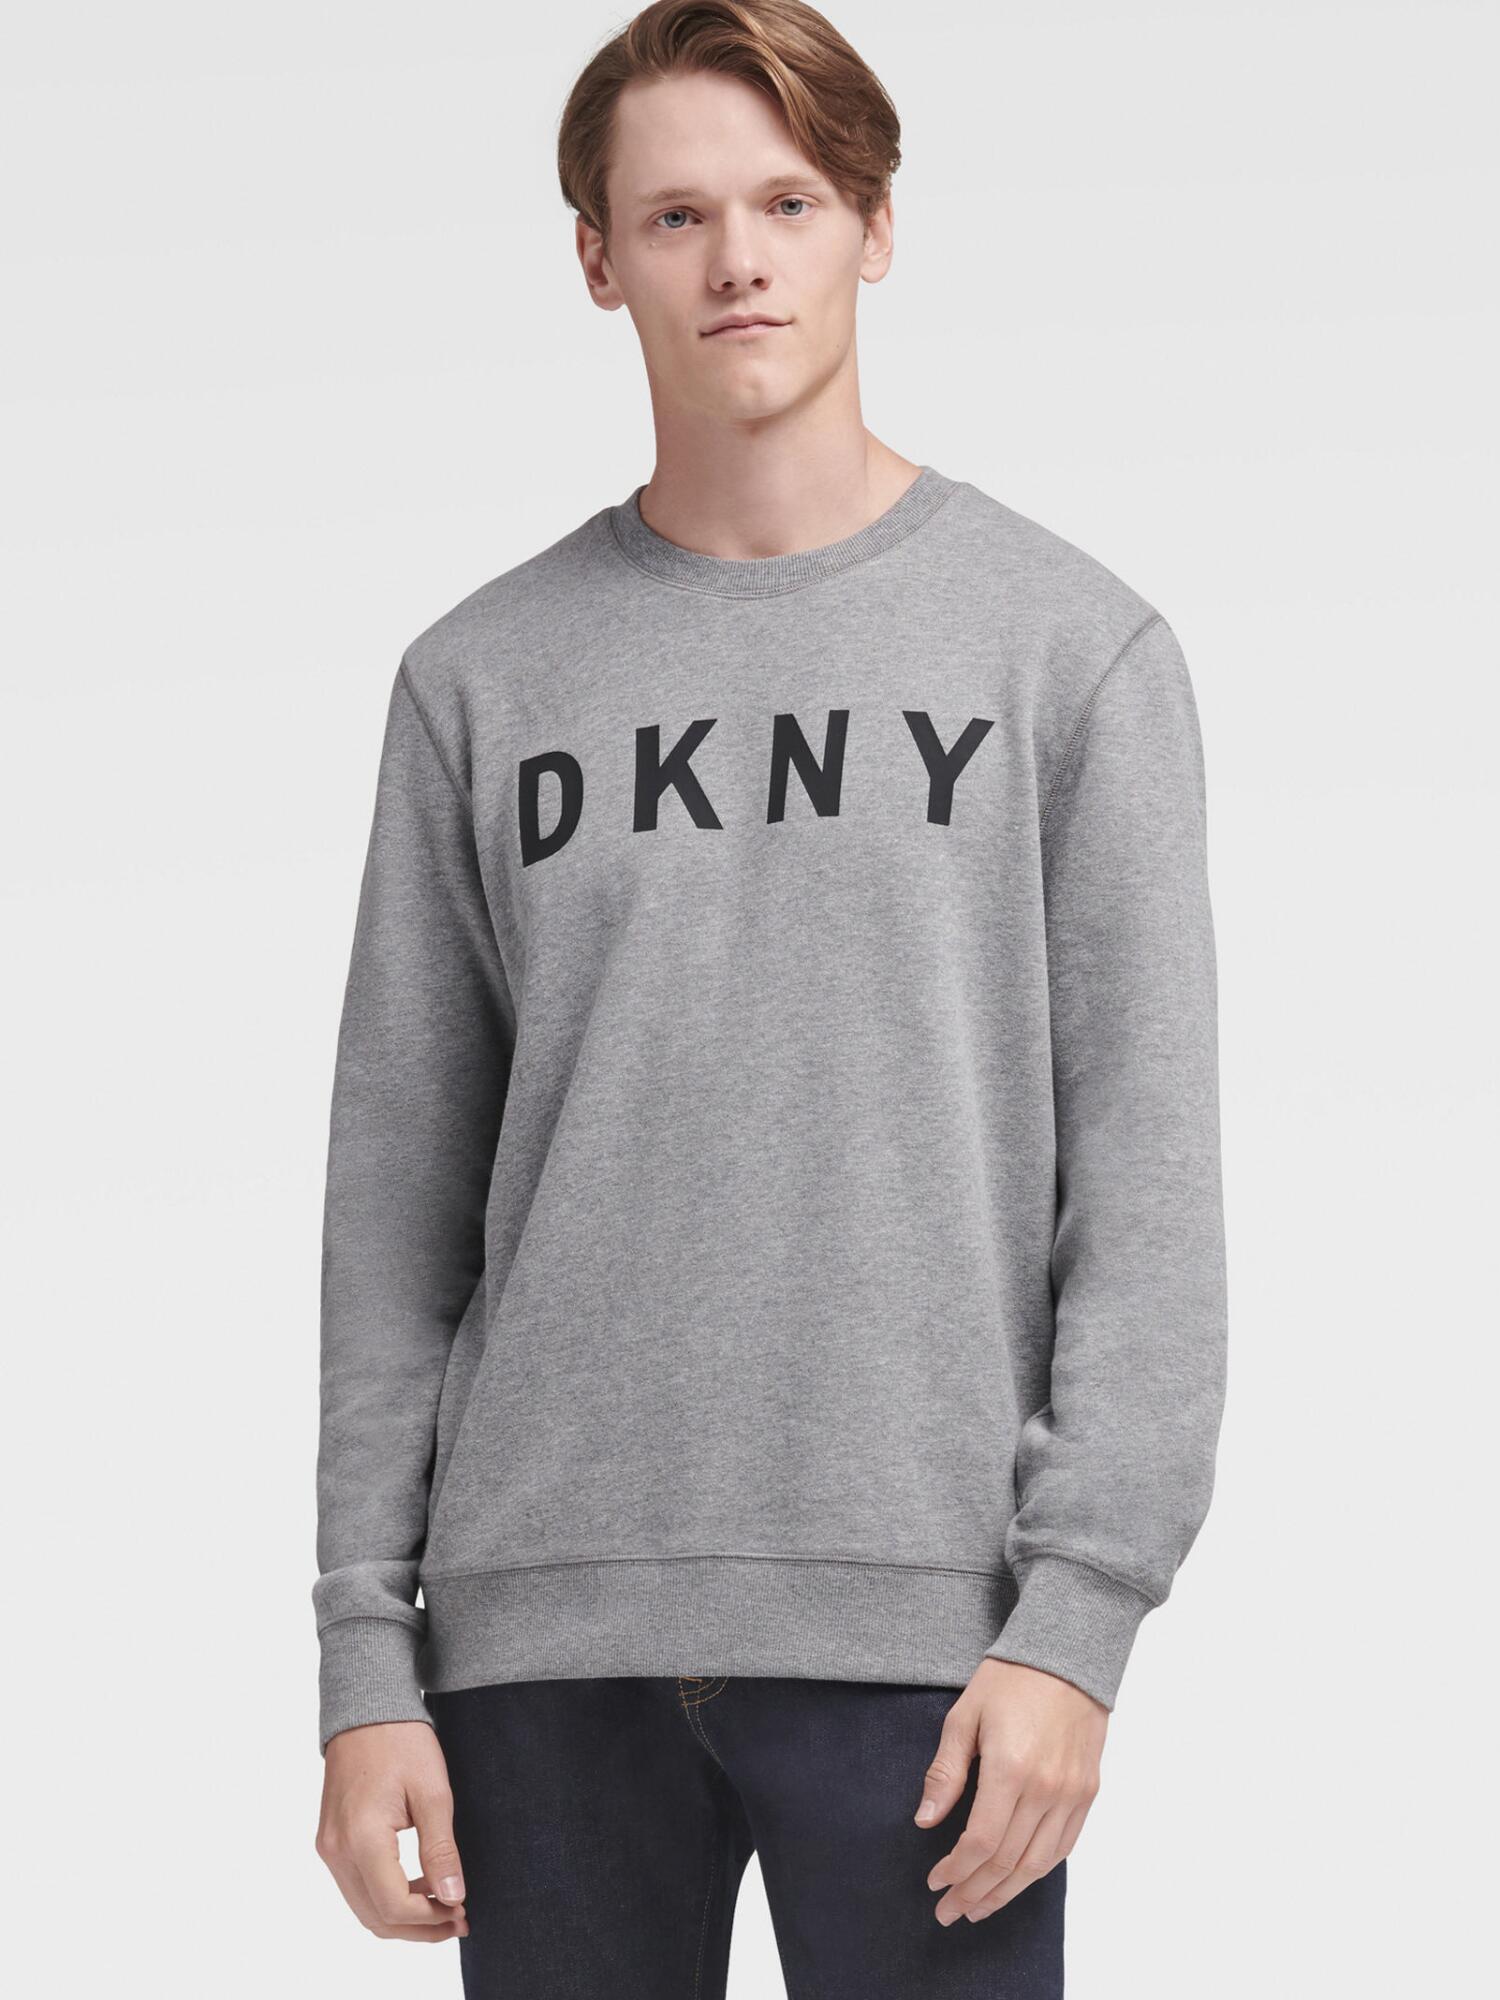 DKNY Logo Fleece Pullover in Heather Grey (Gray) for Men - Lyst